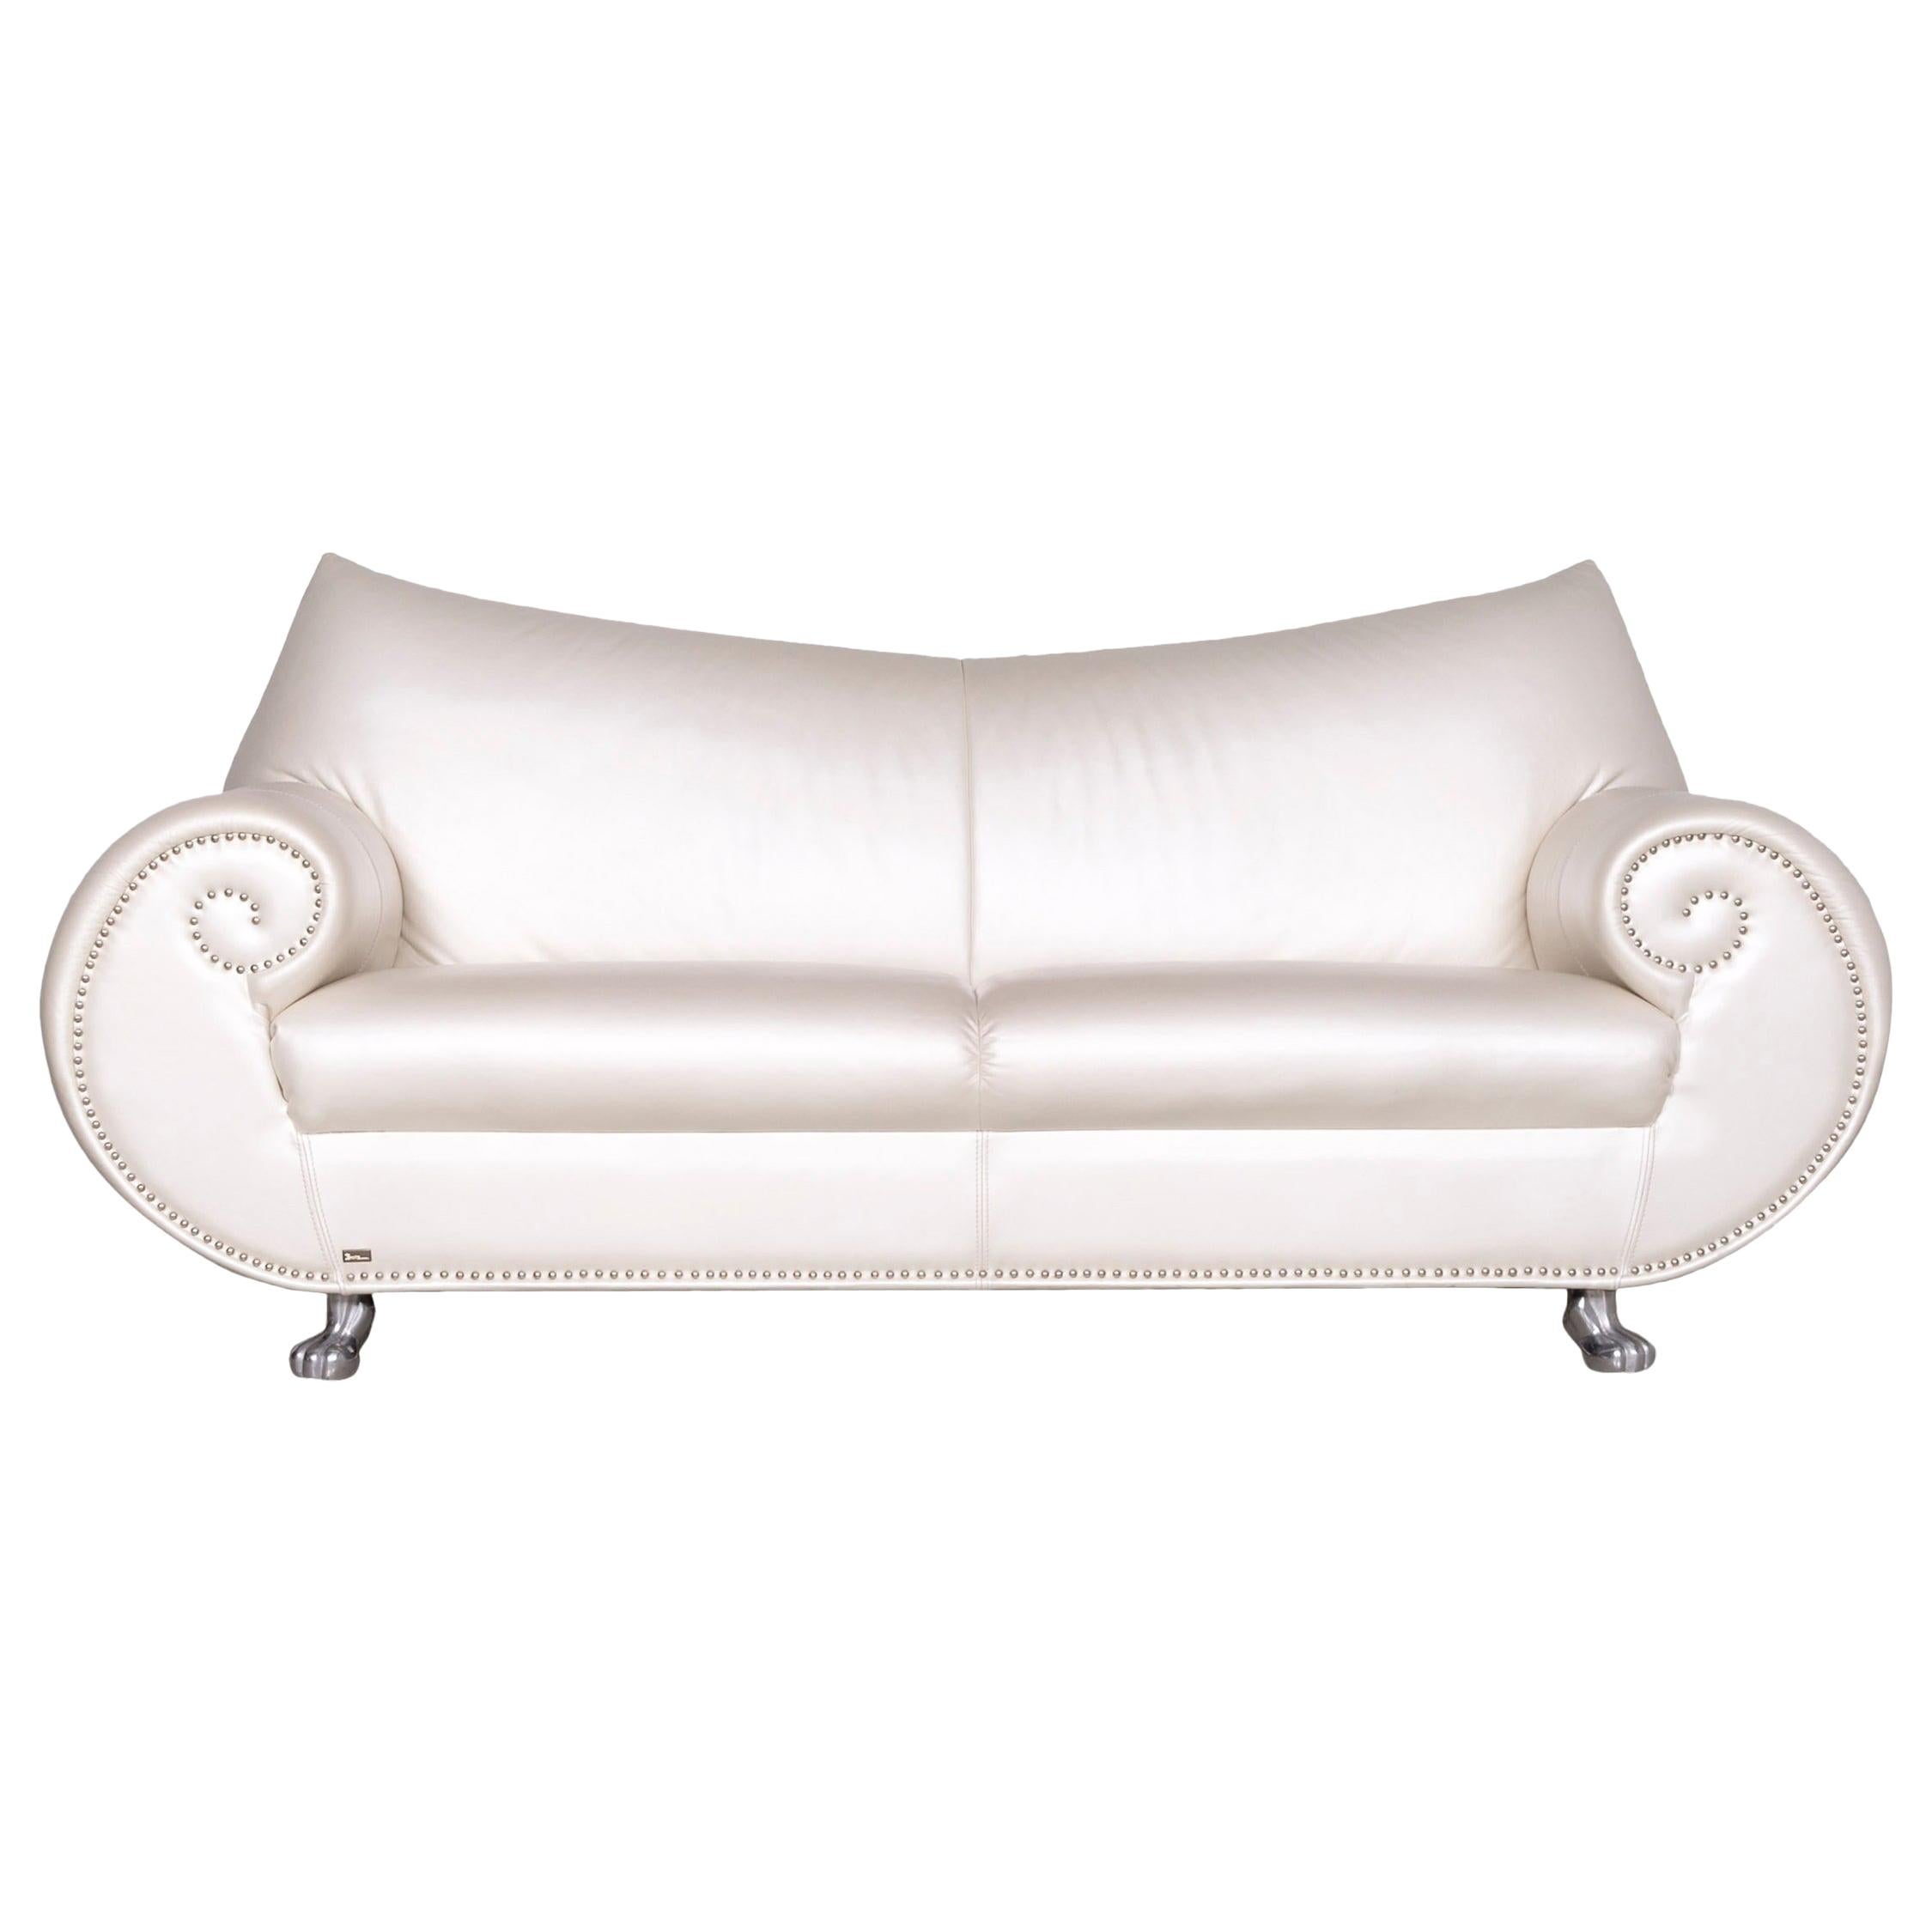 Bretz Gaudi Designer Leather Sofa White Two-Seat Couch For Sale